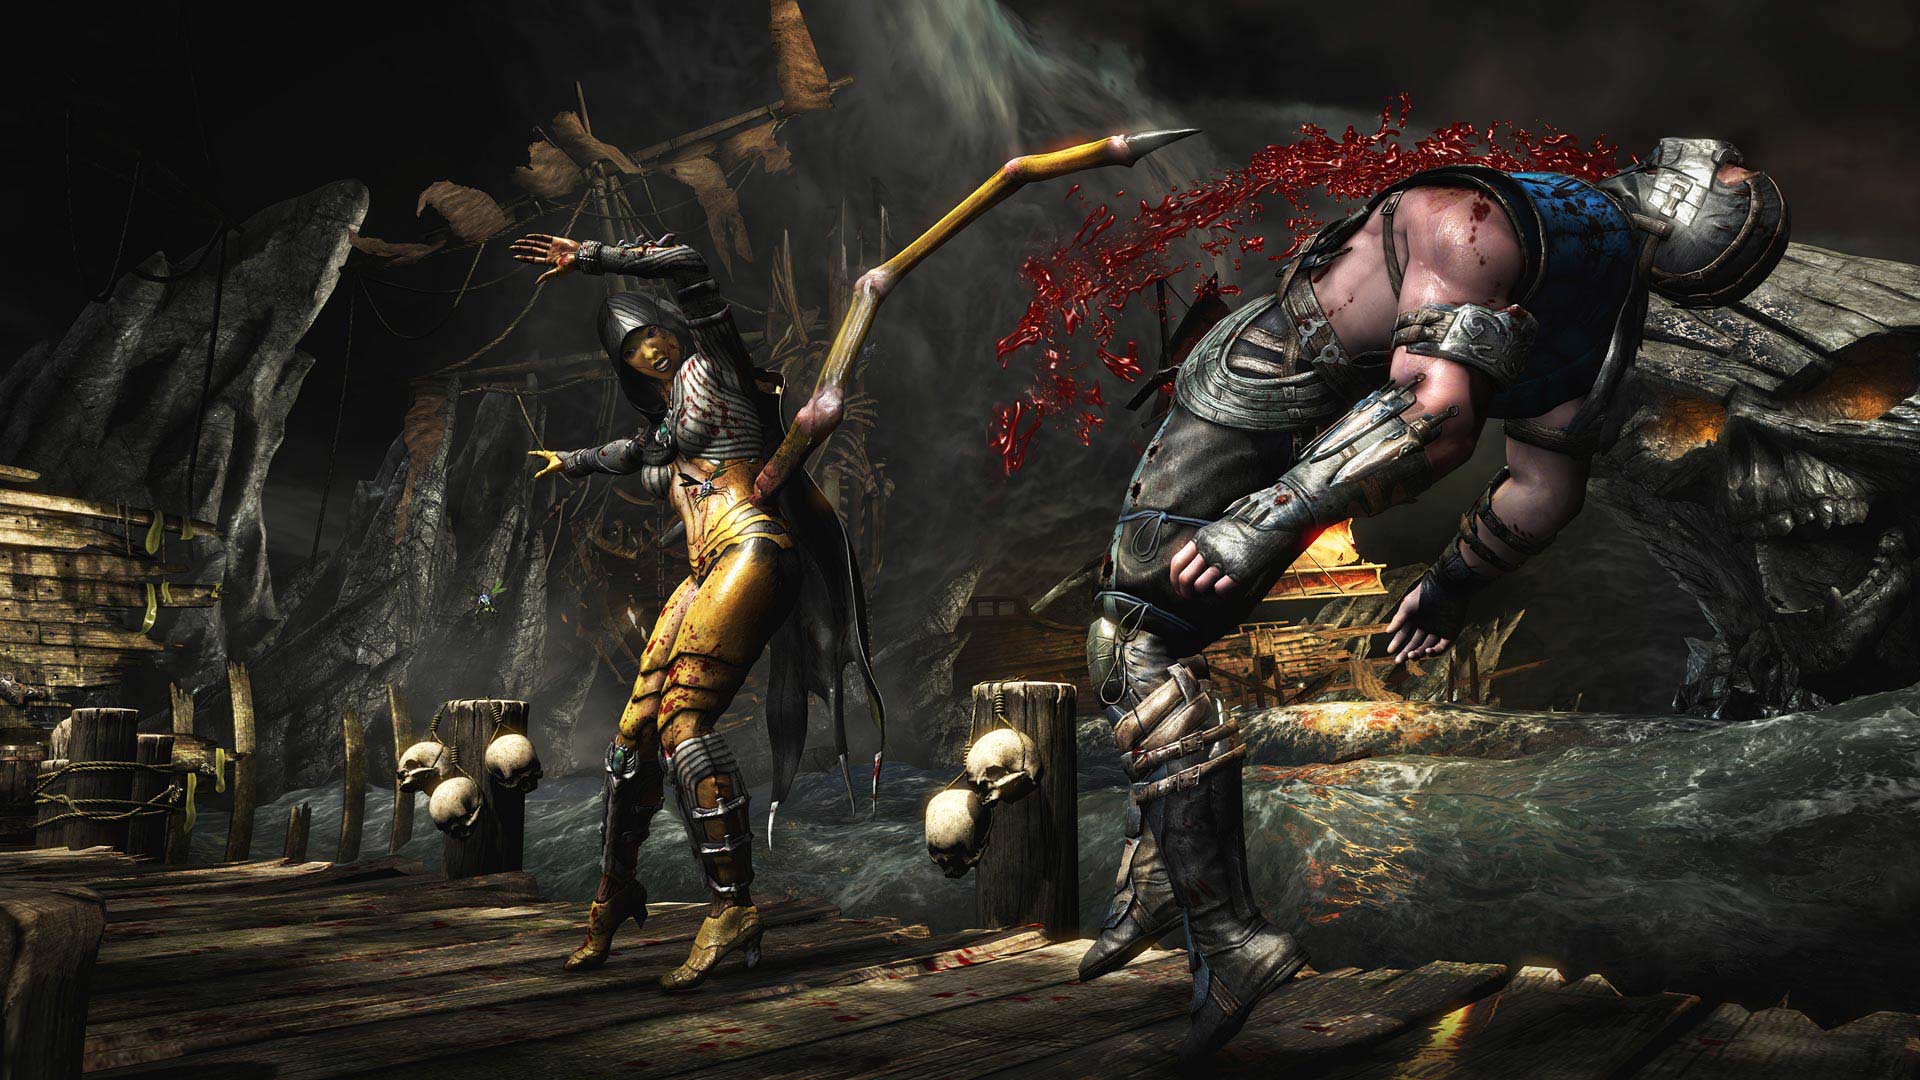 Encogerse de hombros temporal tumor Save 75% on Mortal Kombat X on Steam